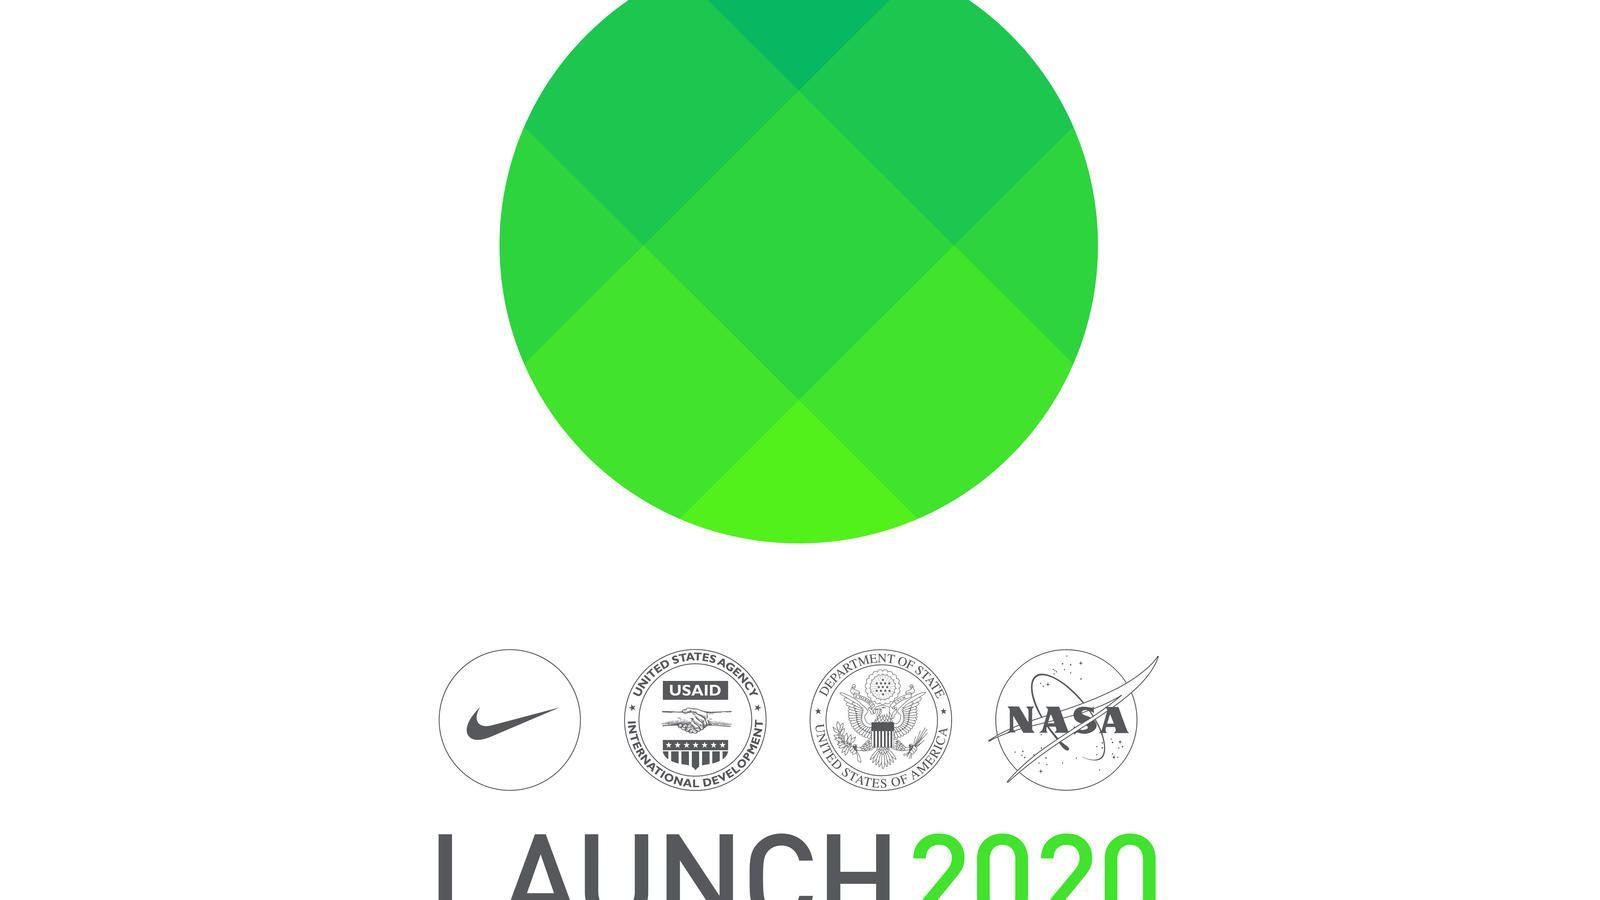 2020 NASA Logo - Nike, NASA, State Department and USAID aim to revolutionize